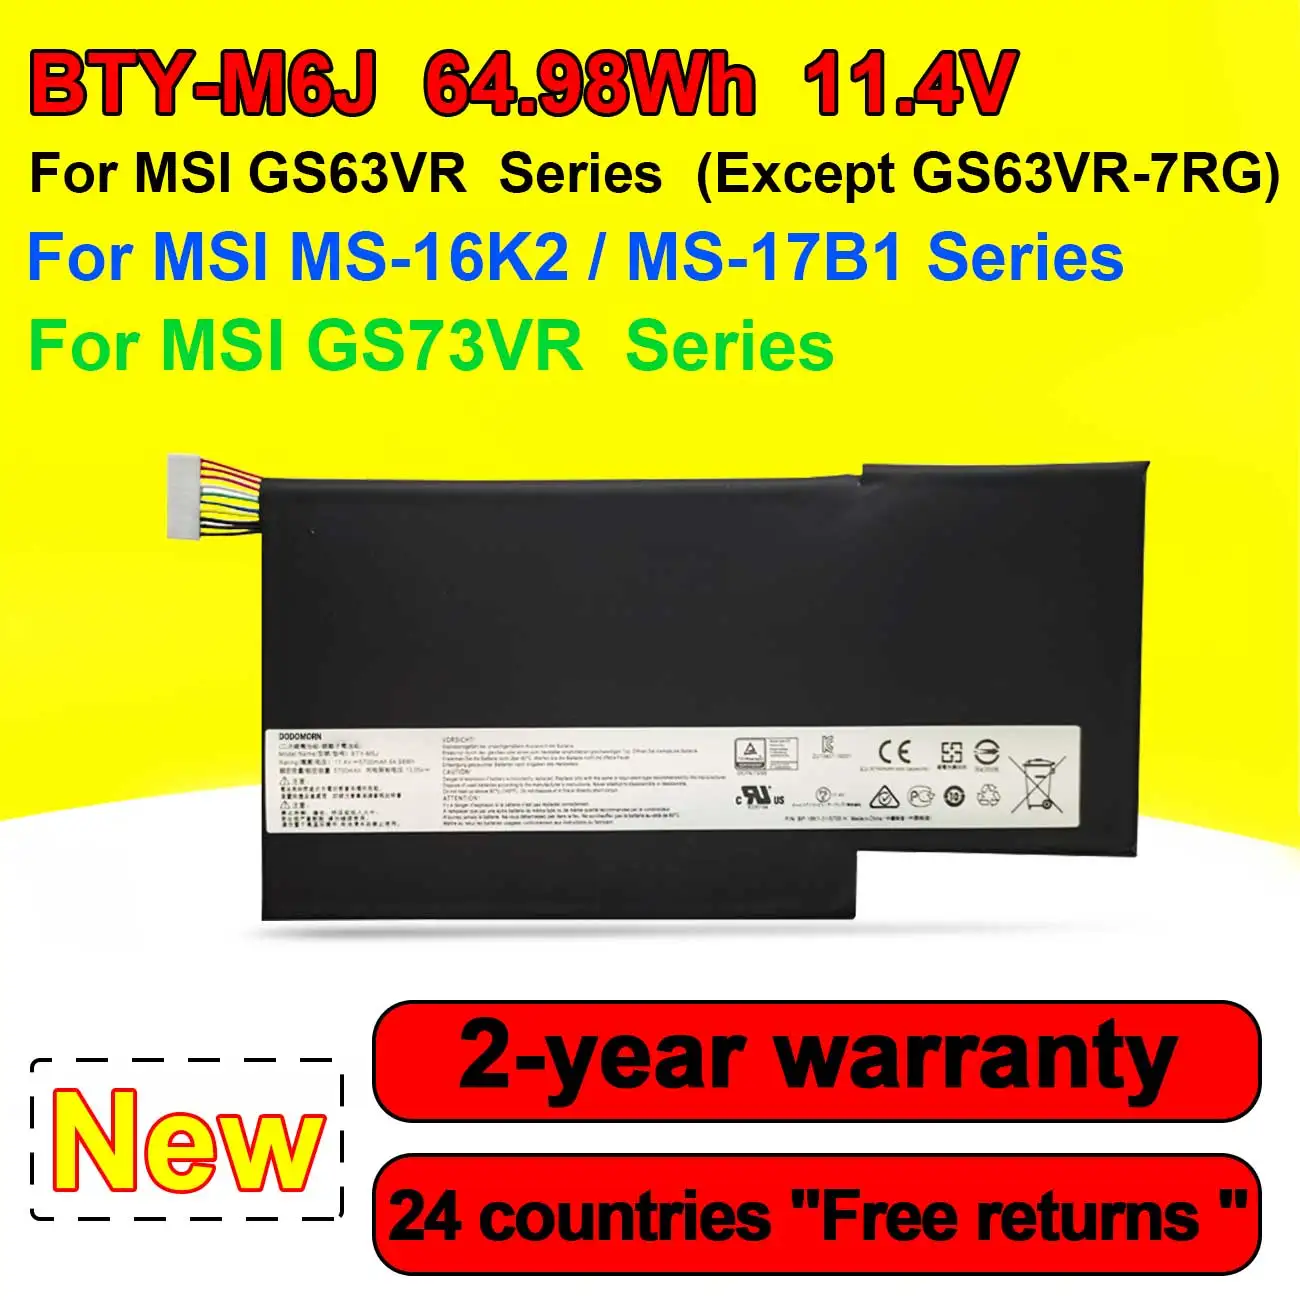 

New 11.4V 64.98Wh 5700mAh BTY-M6J Laptop Battery For MSI GS63VR GS73VR 6RF-001US 7RF-258CN MS-16K2 MS-17B1 Series In Stock